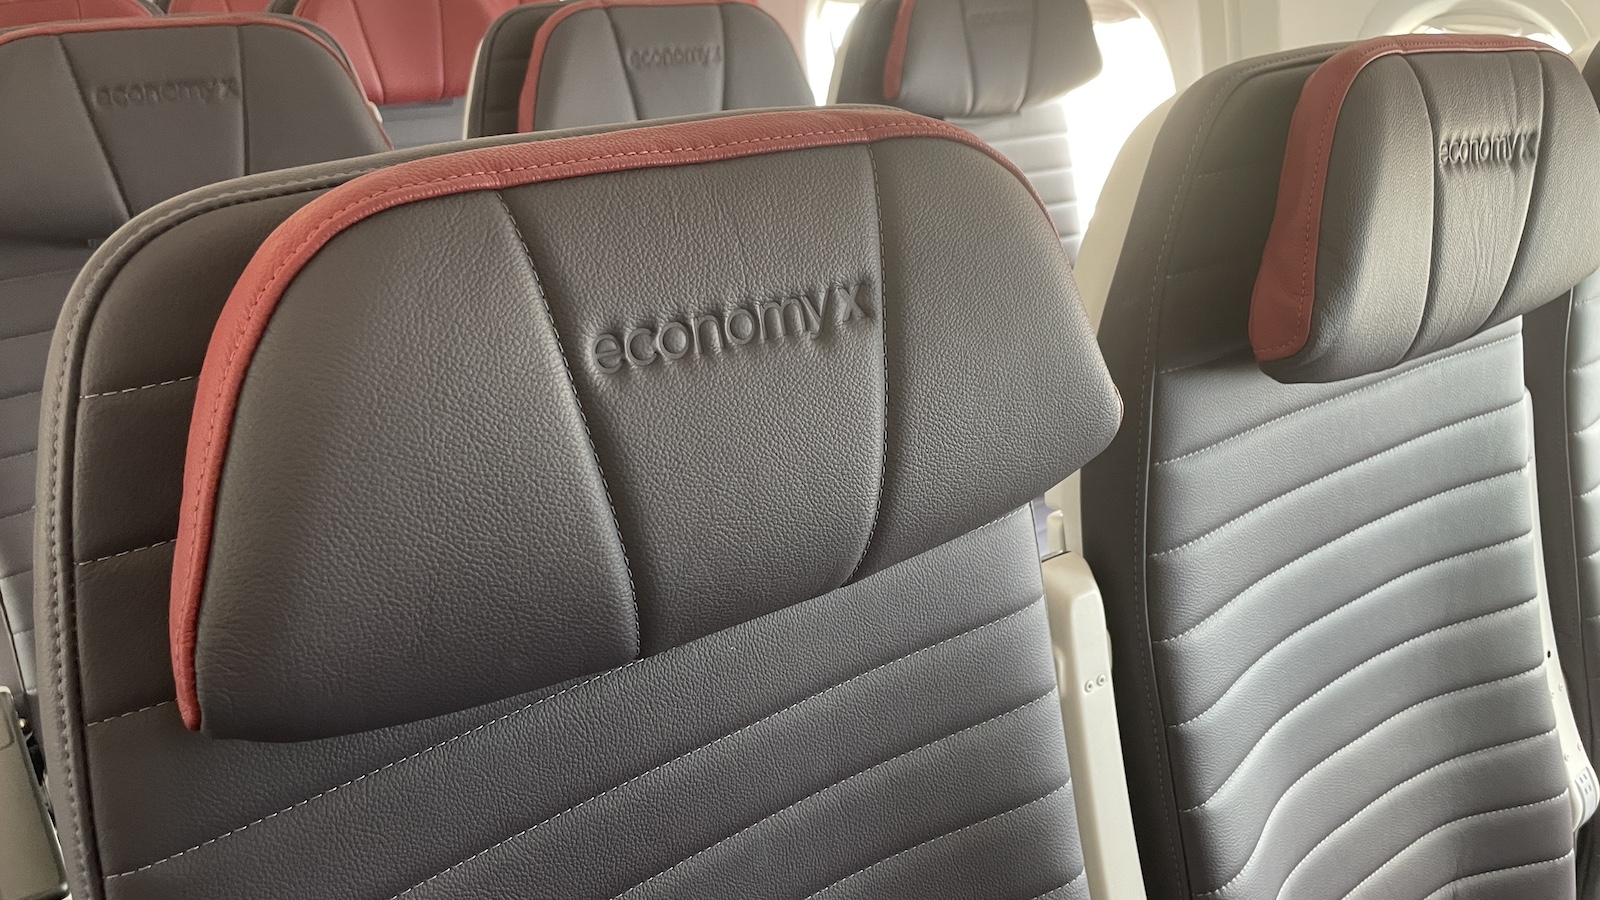 Virgin Australia Cairns Tokyo Haneda new Economy X headrest